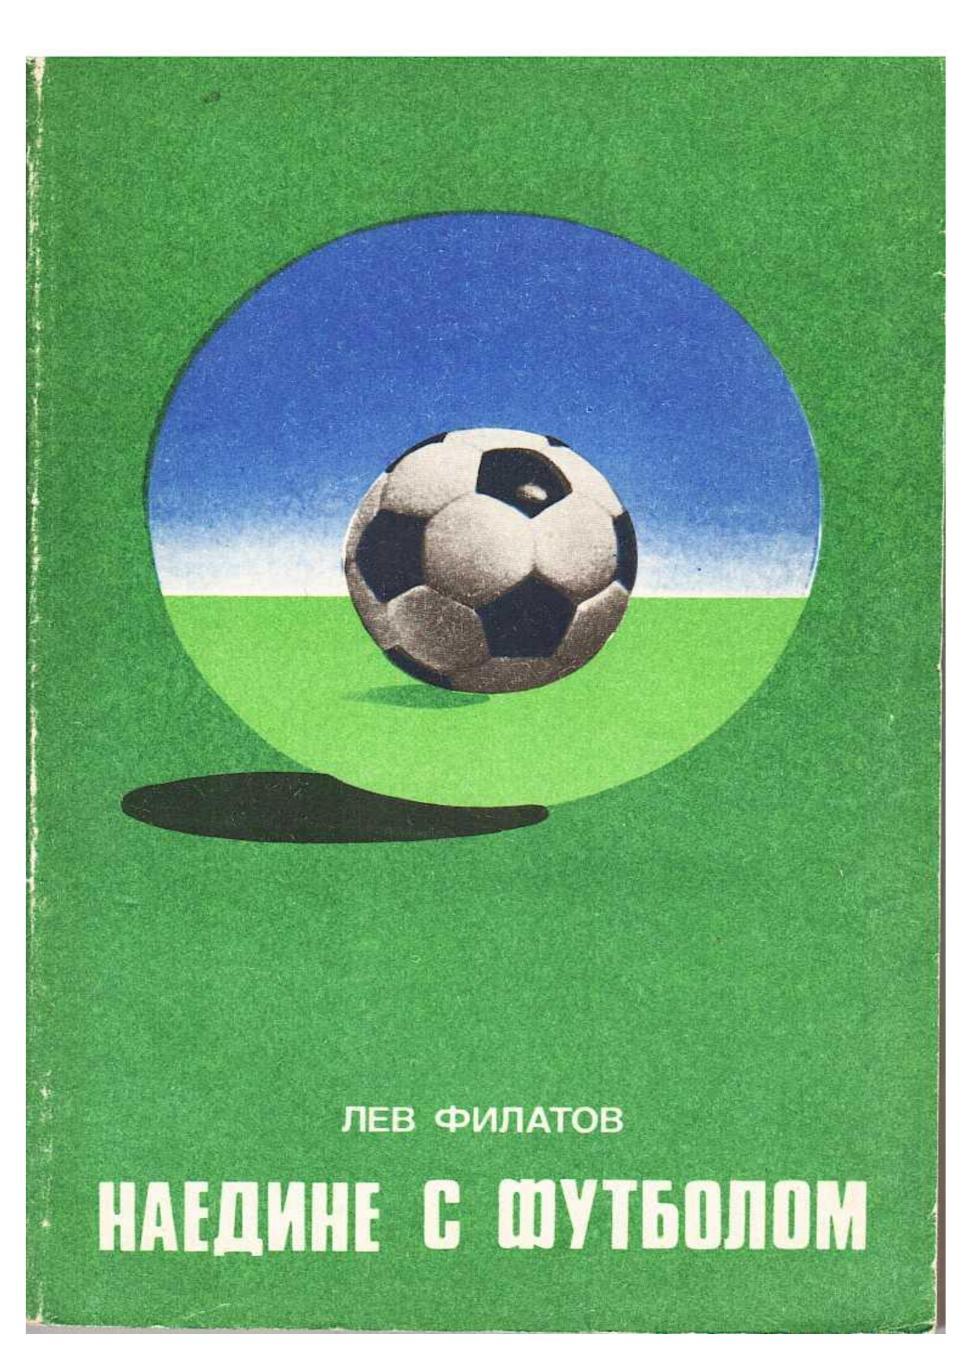 Лев Филатов. Наедине с футболом. Москва, 1977.